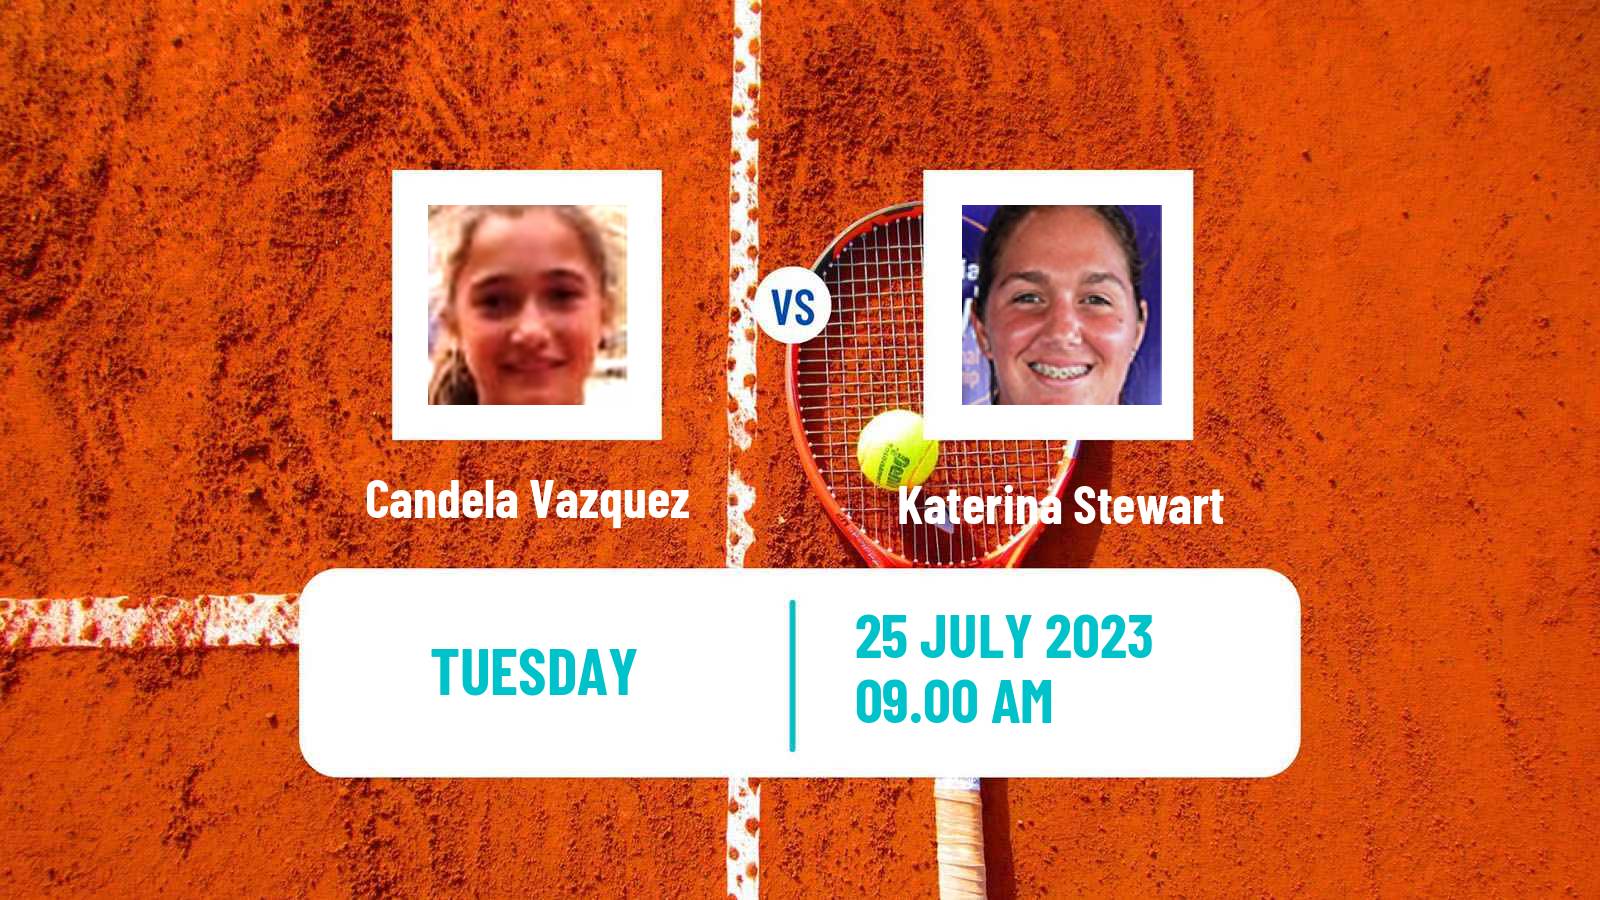 Tennis ITF W25 Bragado Women Candela Vazquez - Katerina Stewart